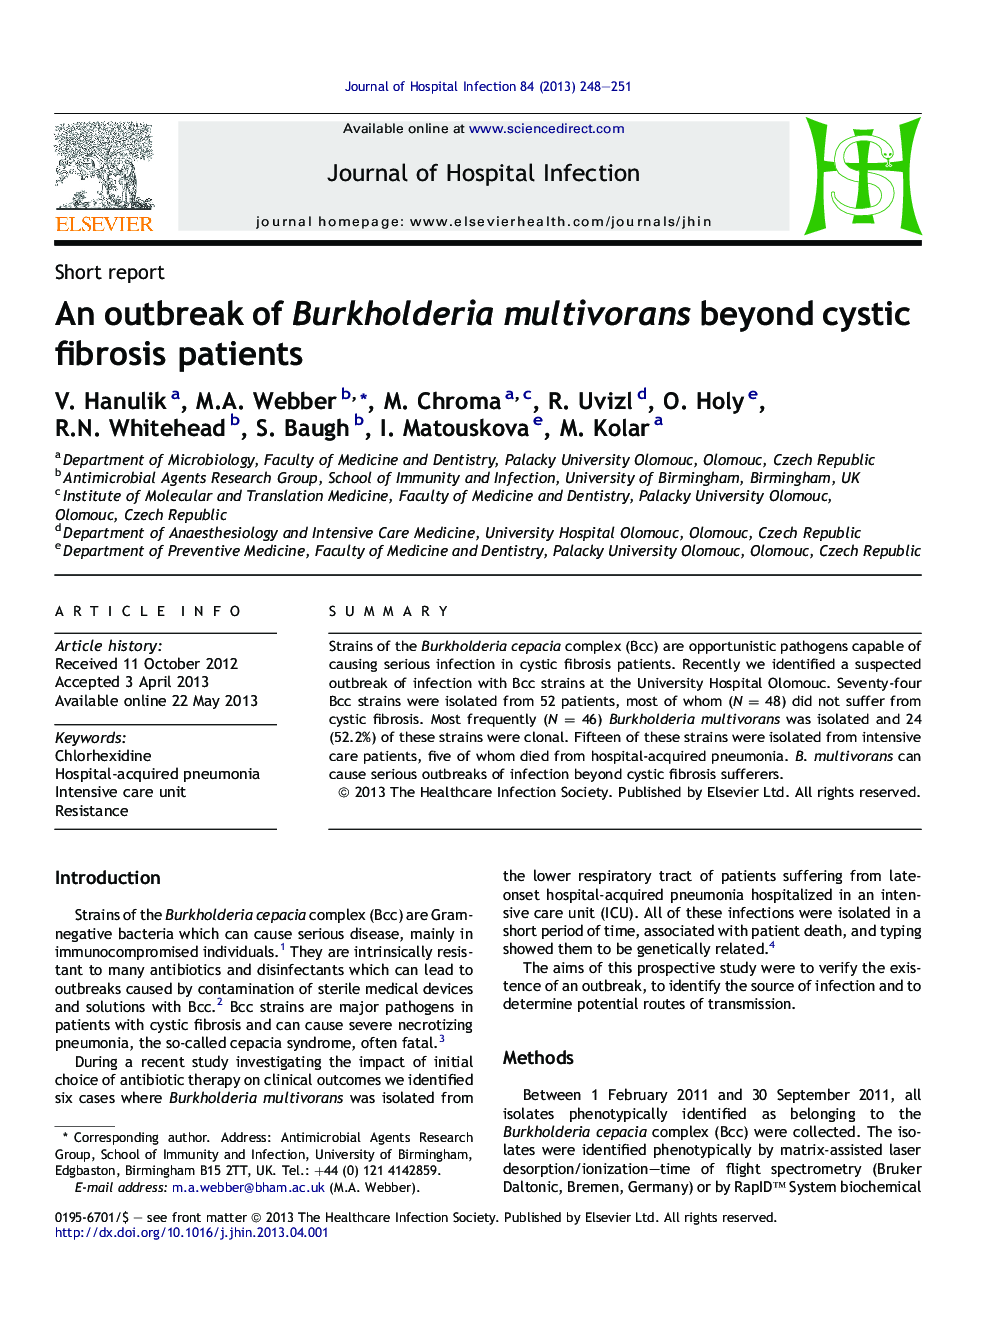 An outbreak of Burkholderia multivorans beyond cystic fibrosis patients